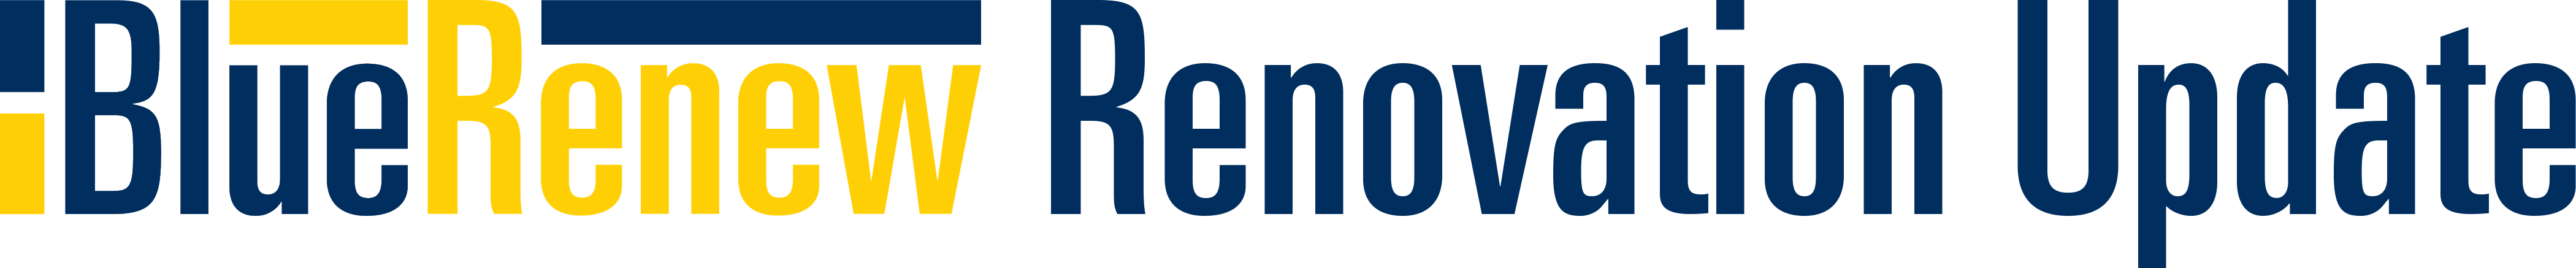 blue renew logo